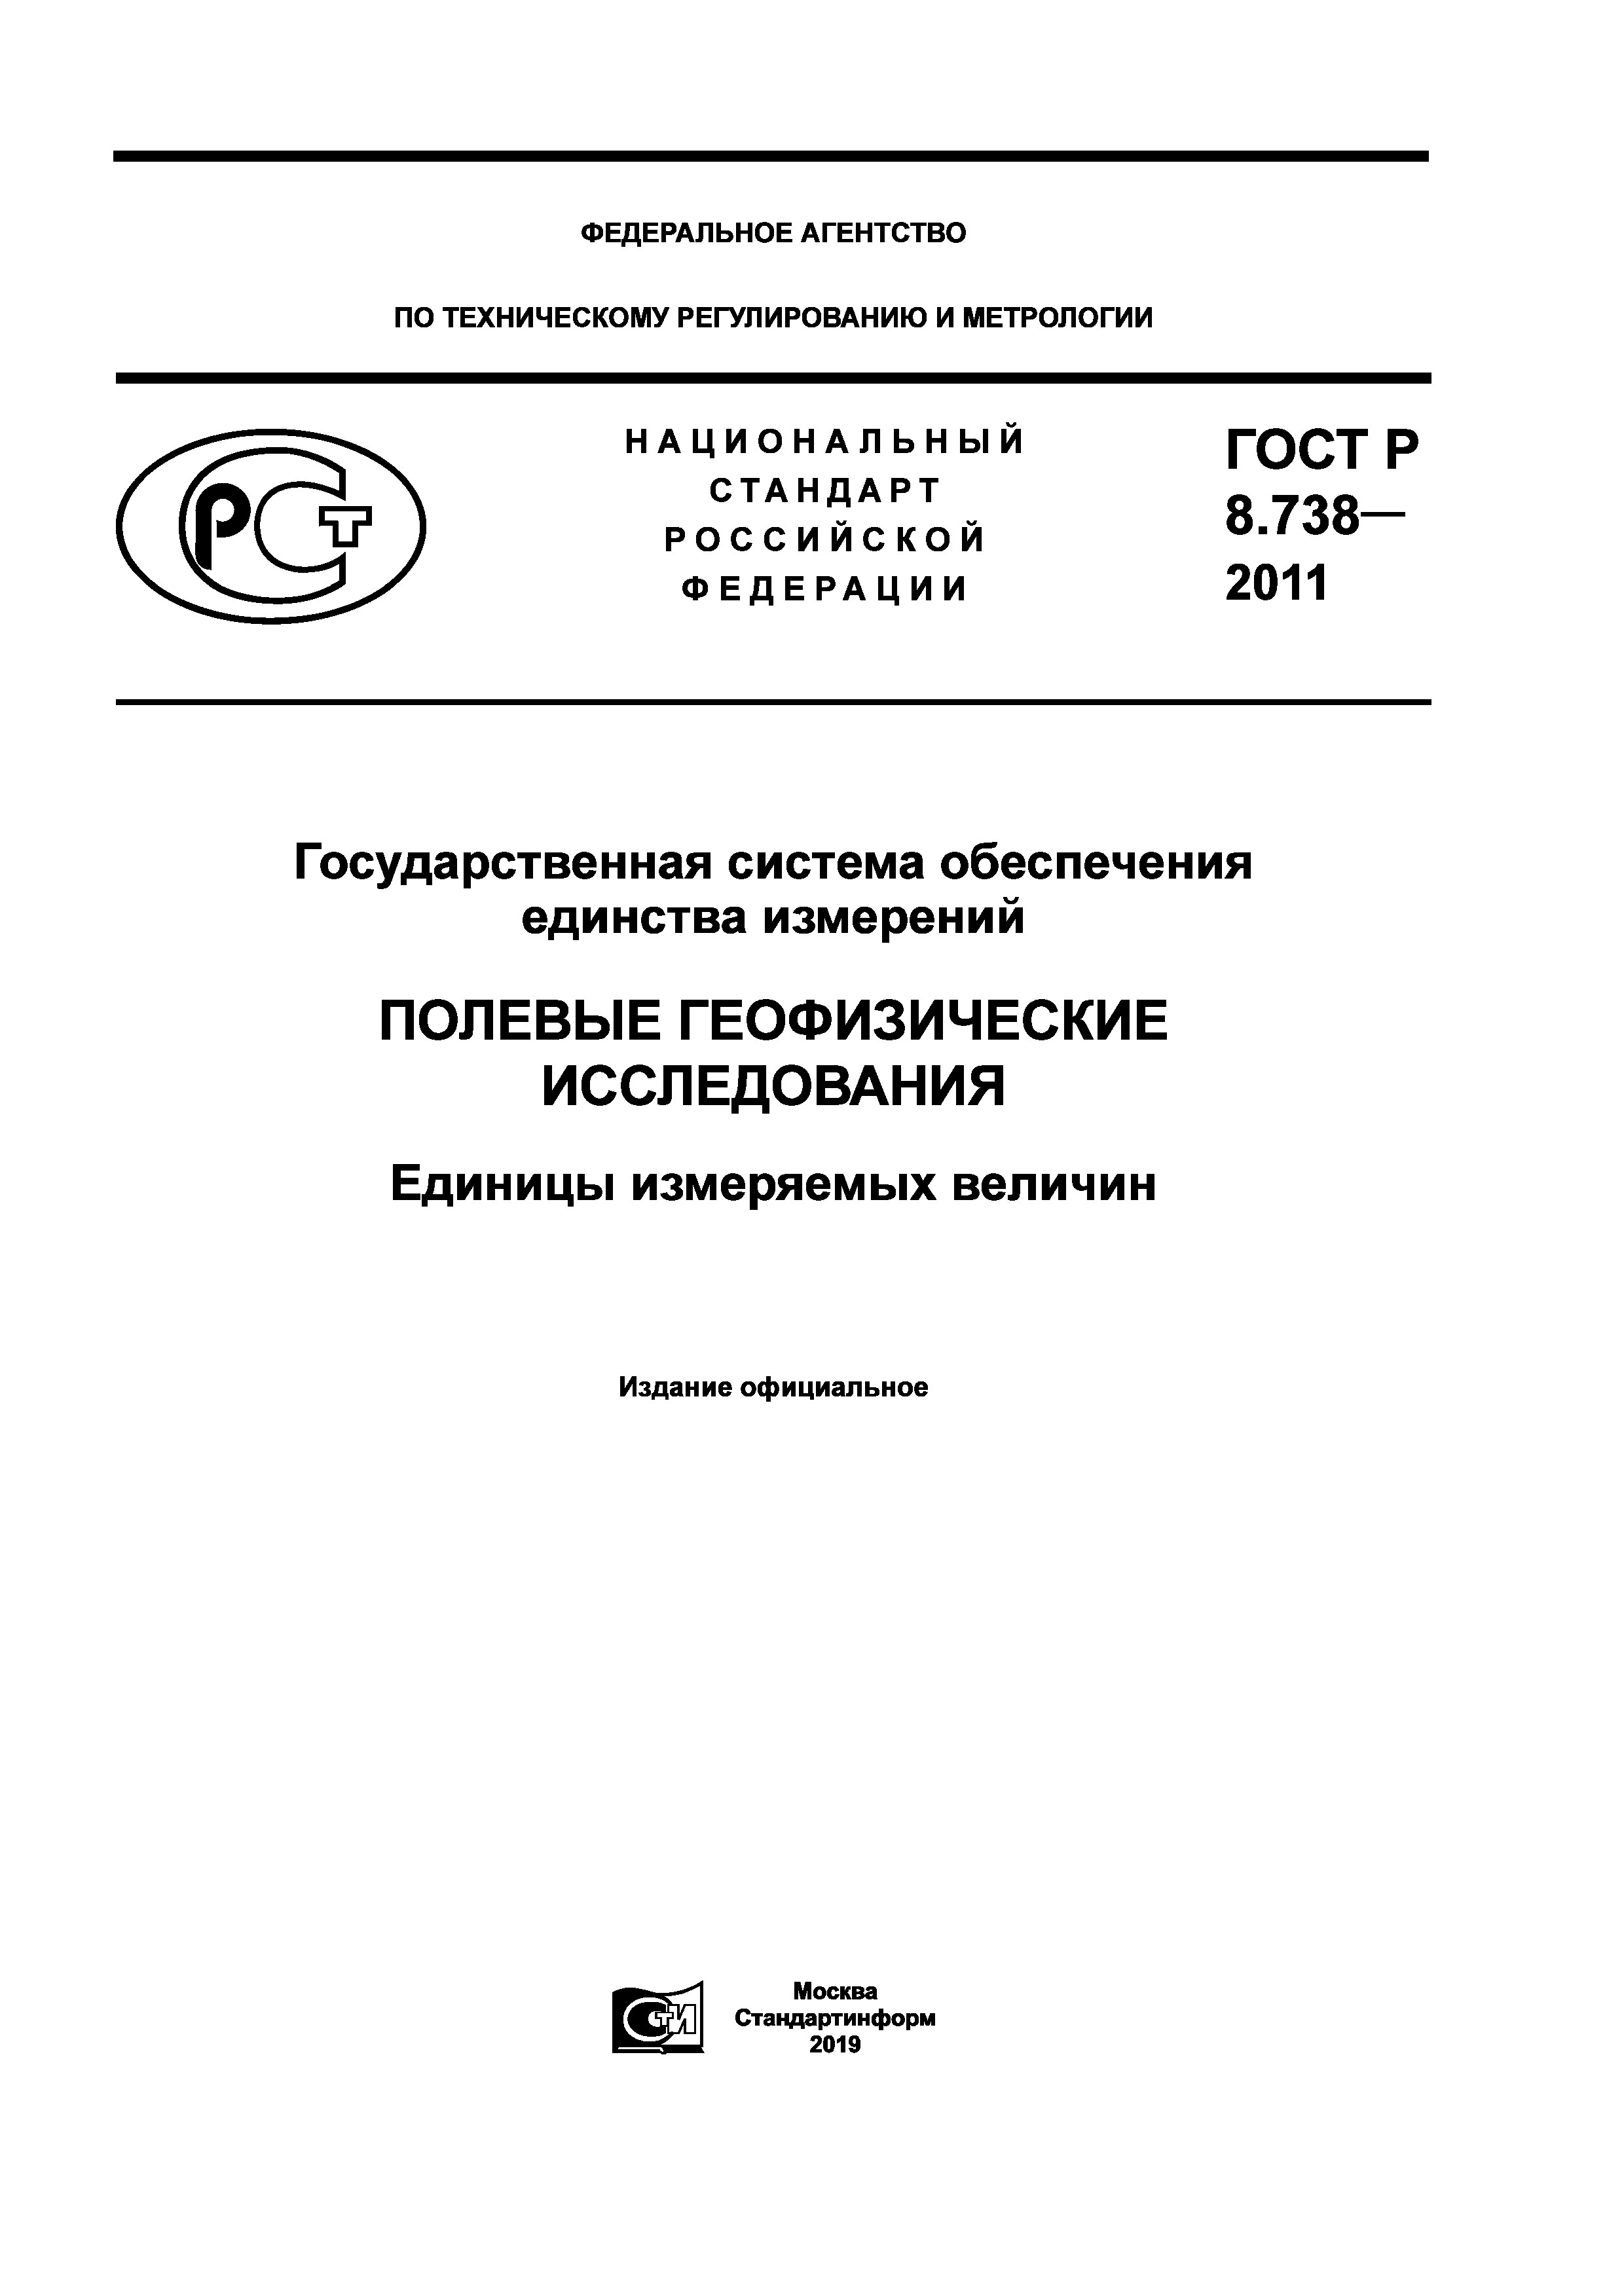 ГОСТ Р 8.738-2011